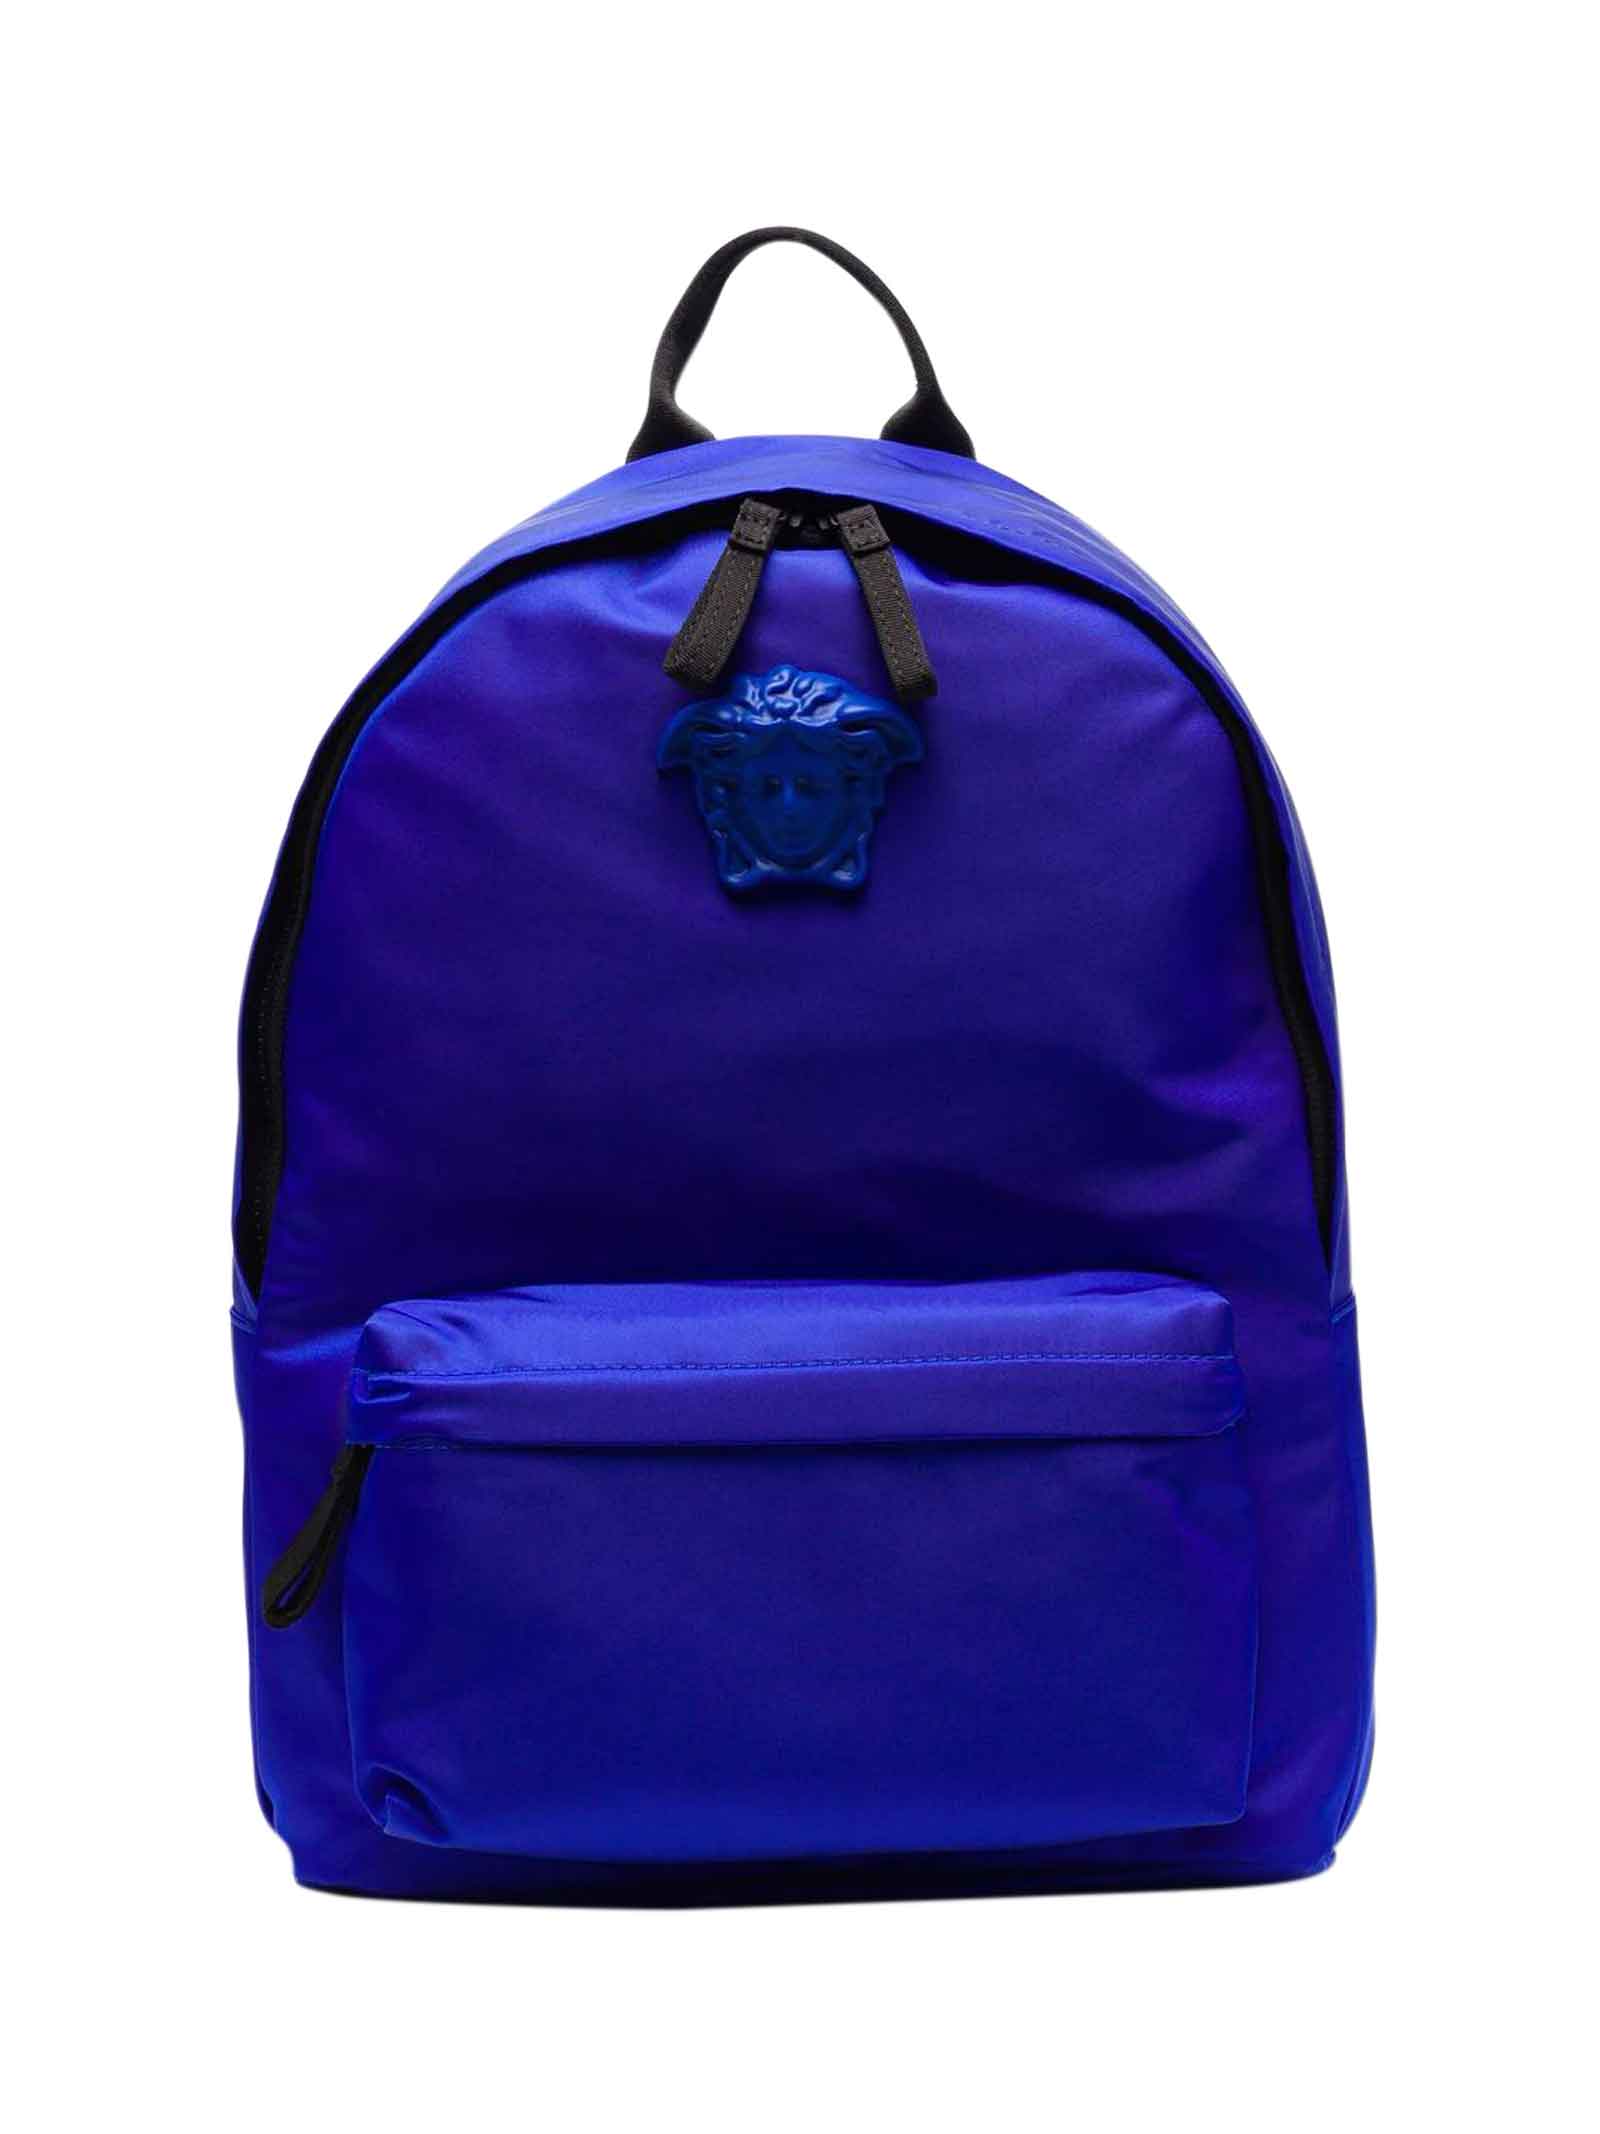 Versace Blue And Black Backpack Kids